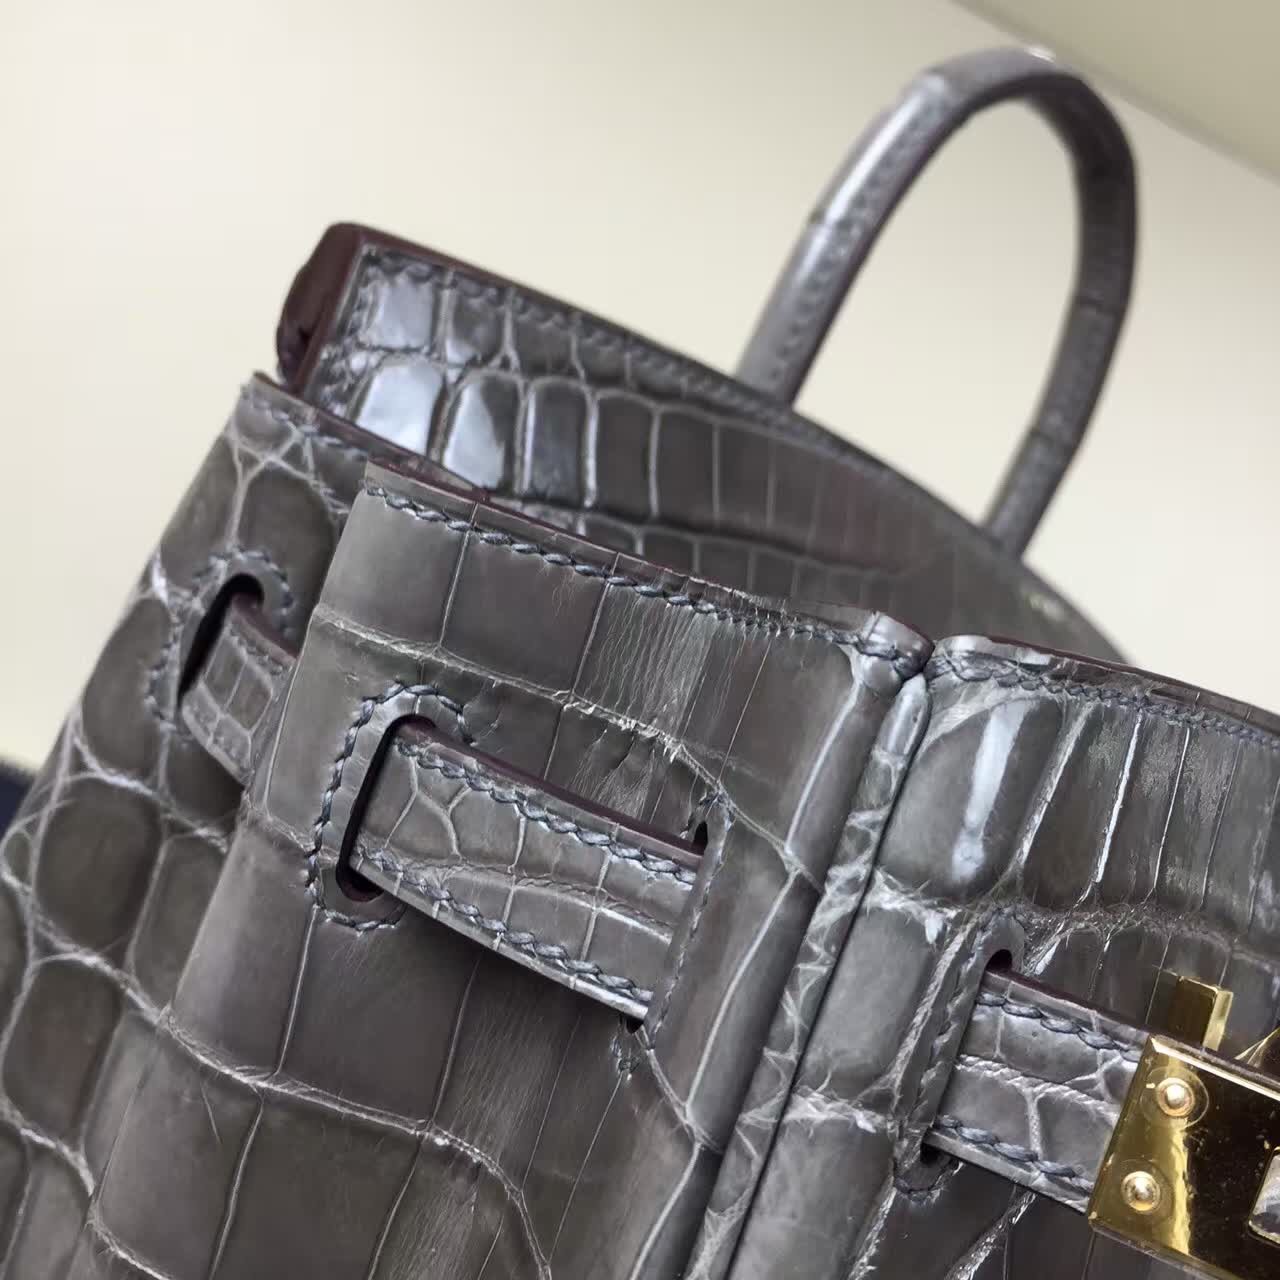 Fashion Hermes CK18 Etoupe Grey Crocodile Shiny Leather Birkin Bag 25cm